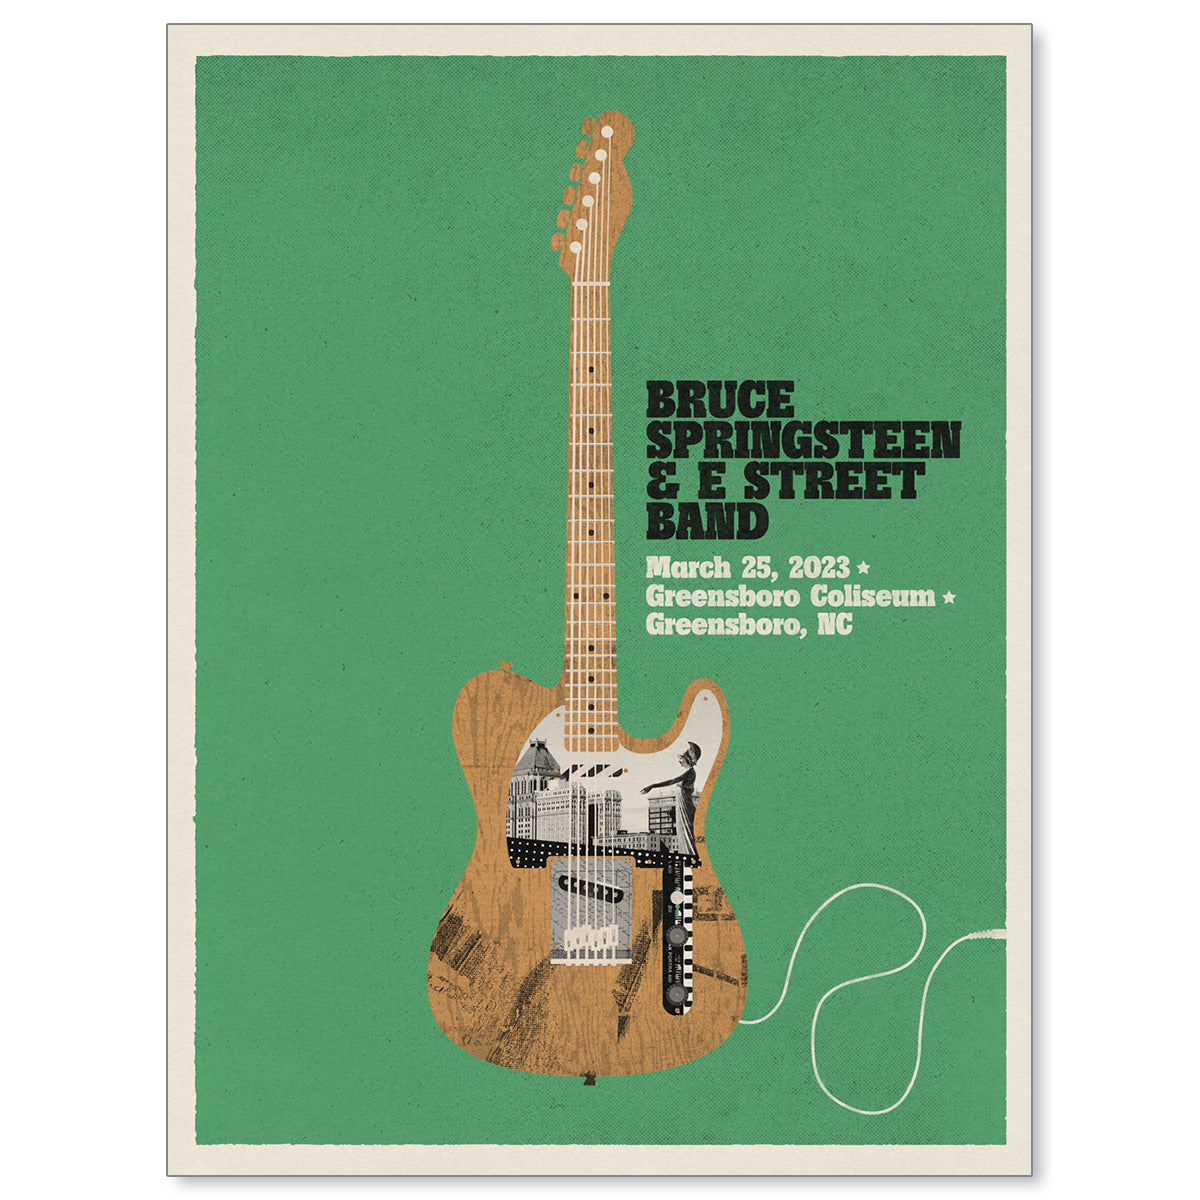 Bruce Springsteen & E Street Band Greensboro March 25, 2023